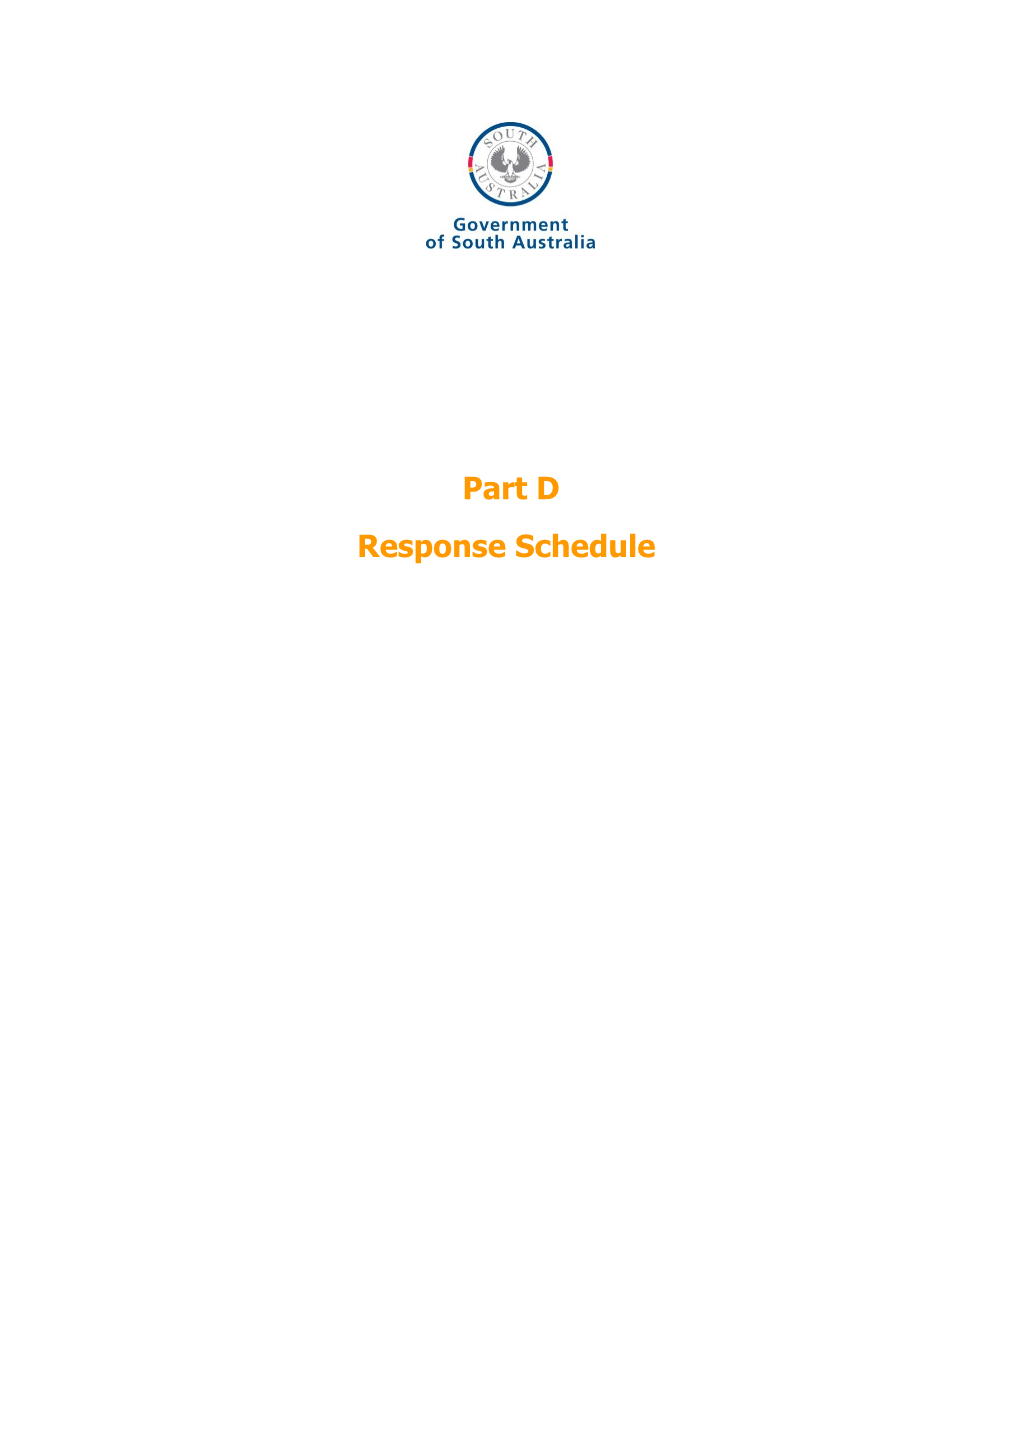 Response Schedule